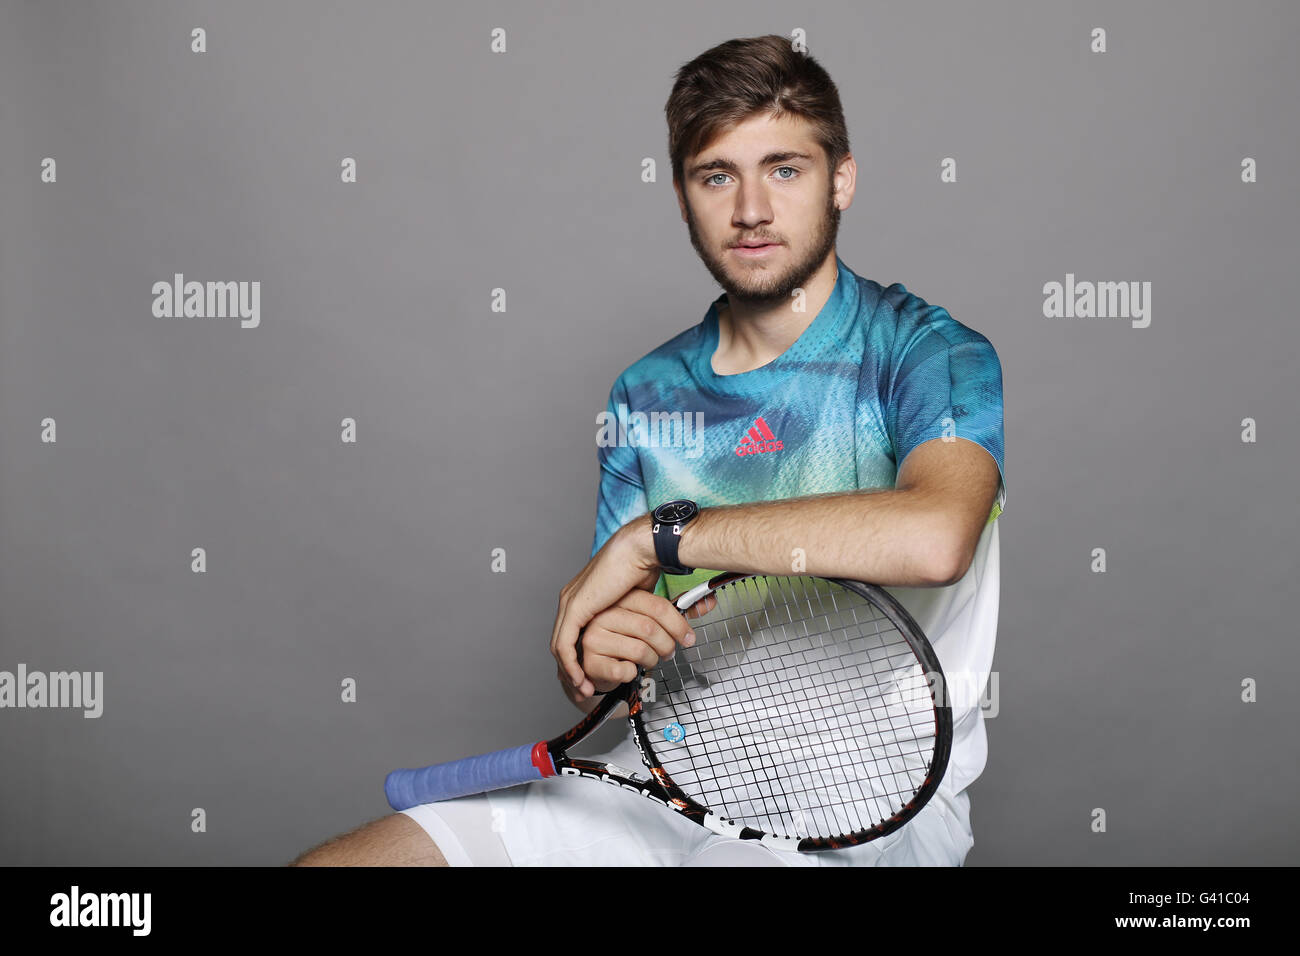 Patrik Rikl, joueur de tennis Photo Stock - Alamy